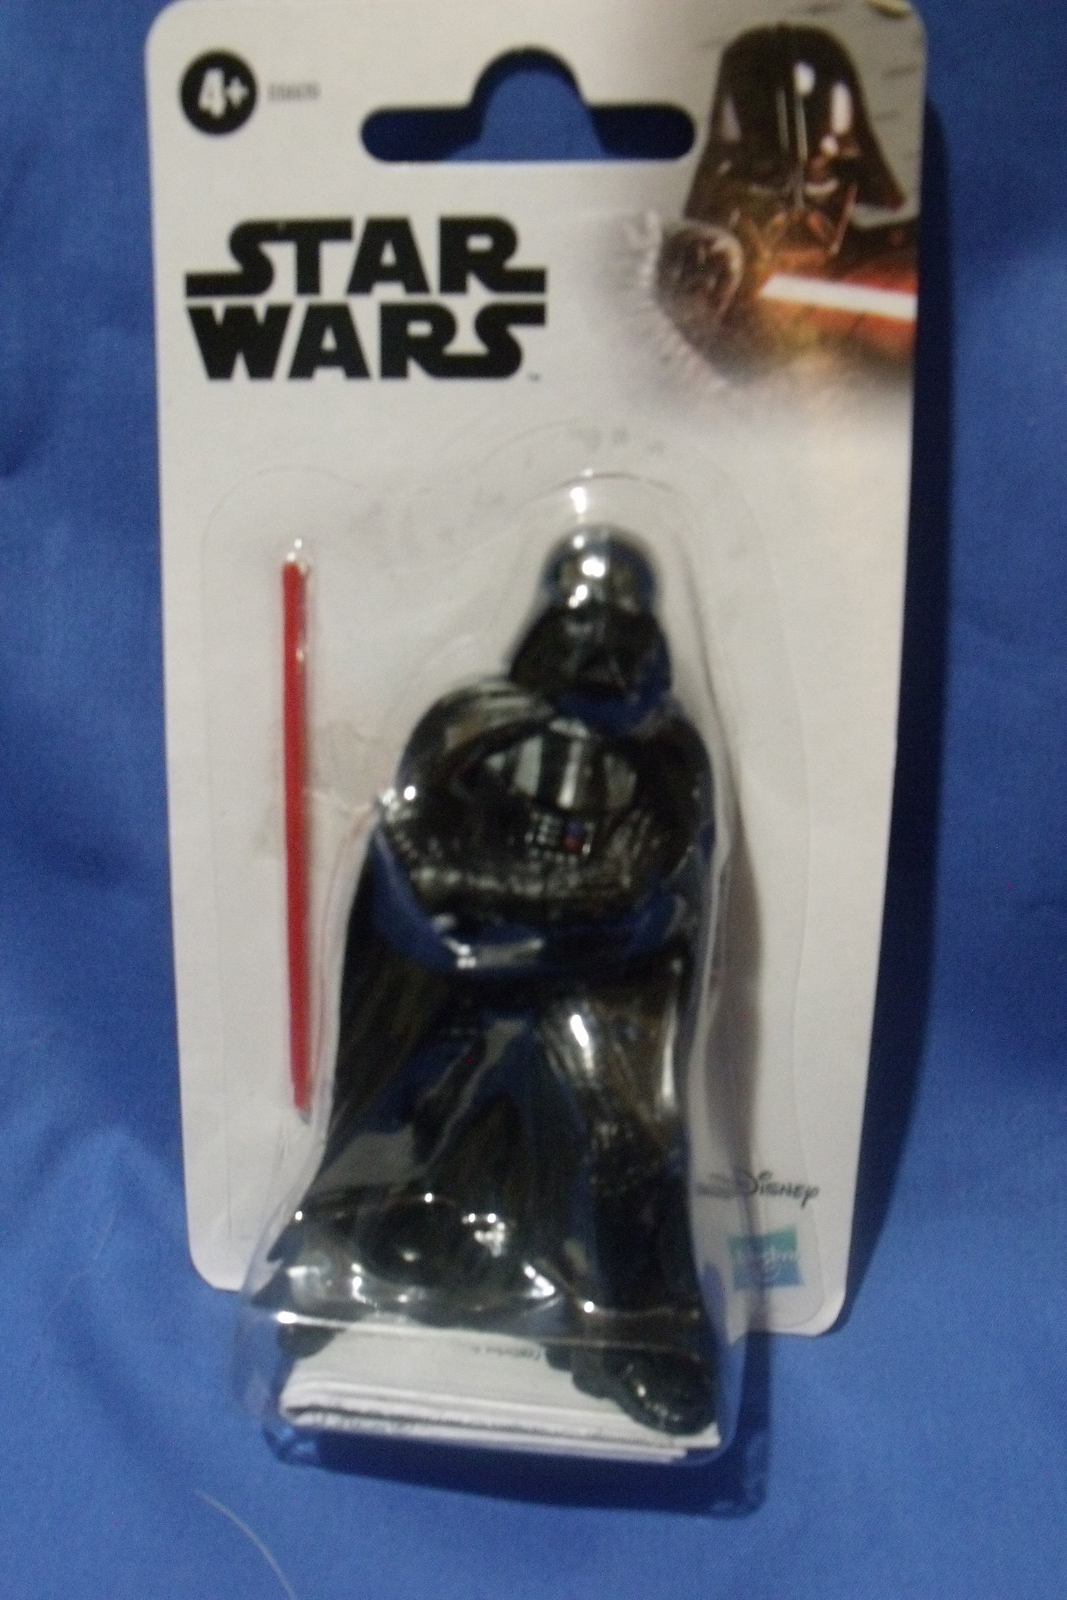 Toys Hasbro Disney Star Wars Darth Vader Lightsaber Action Figure 4 inches tall